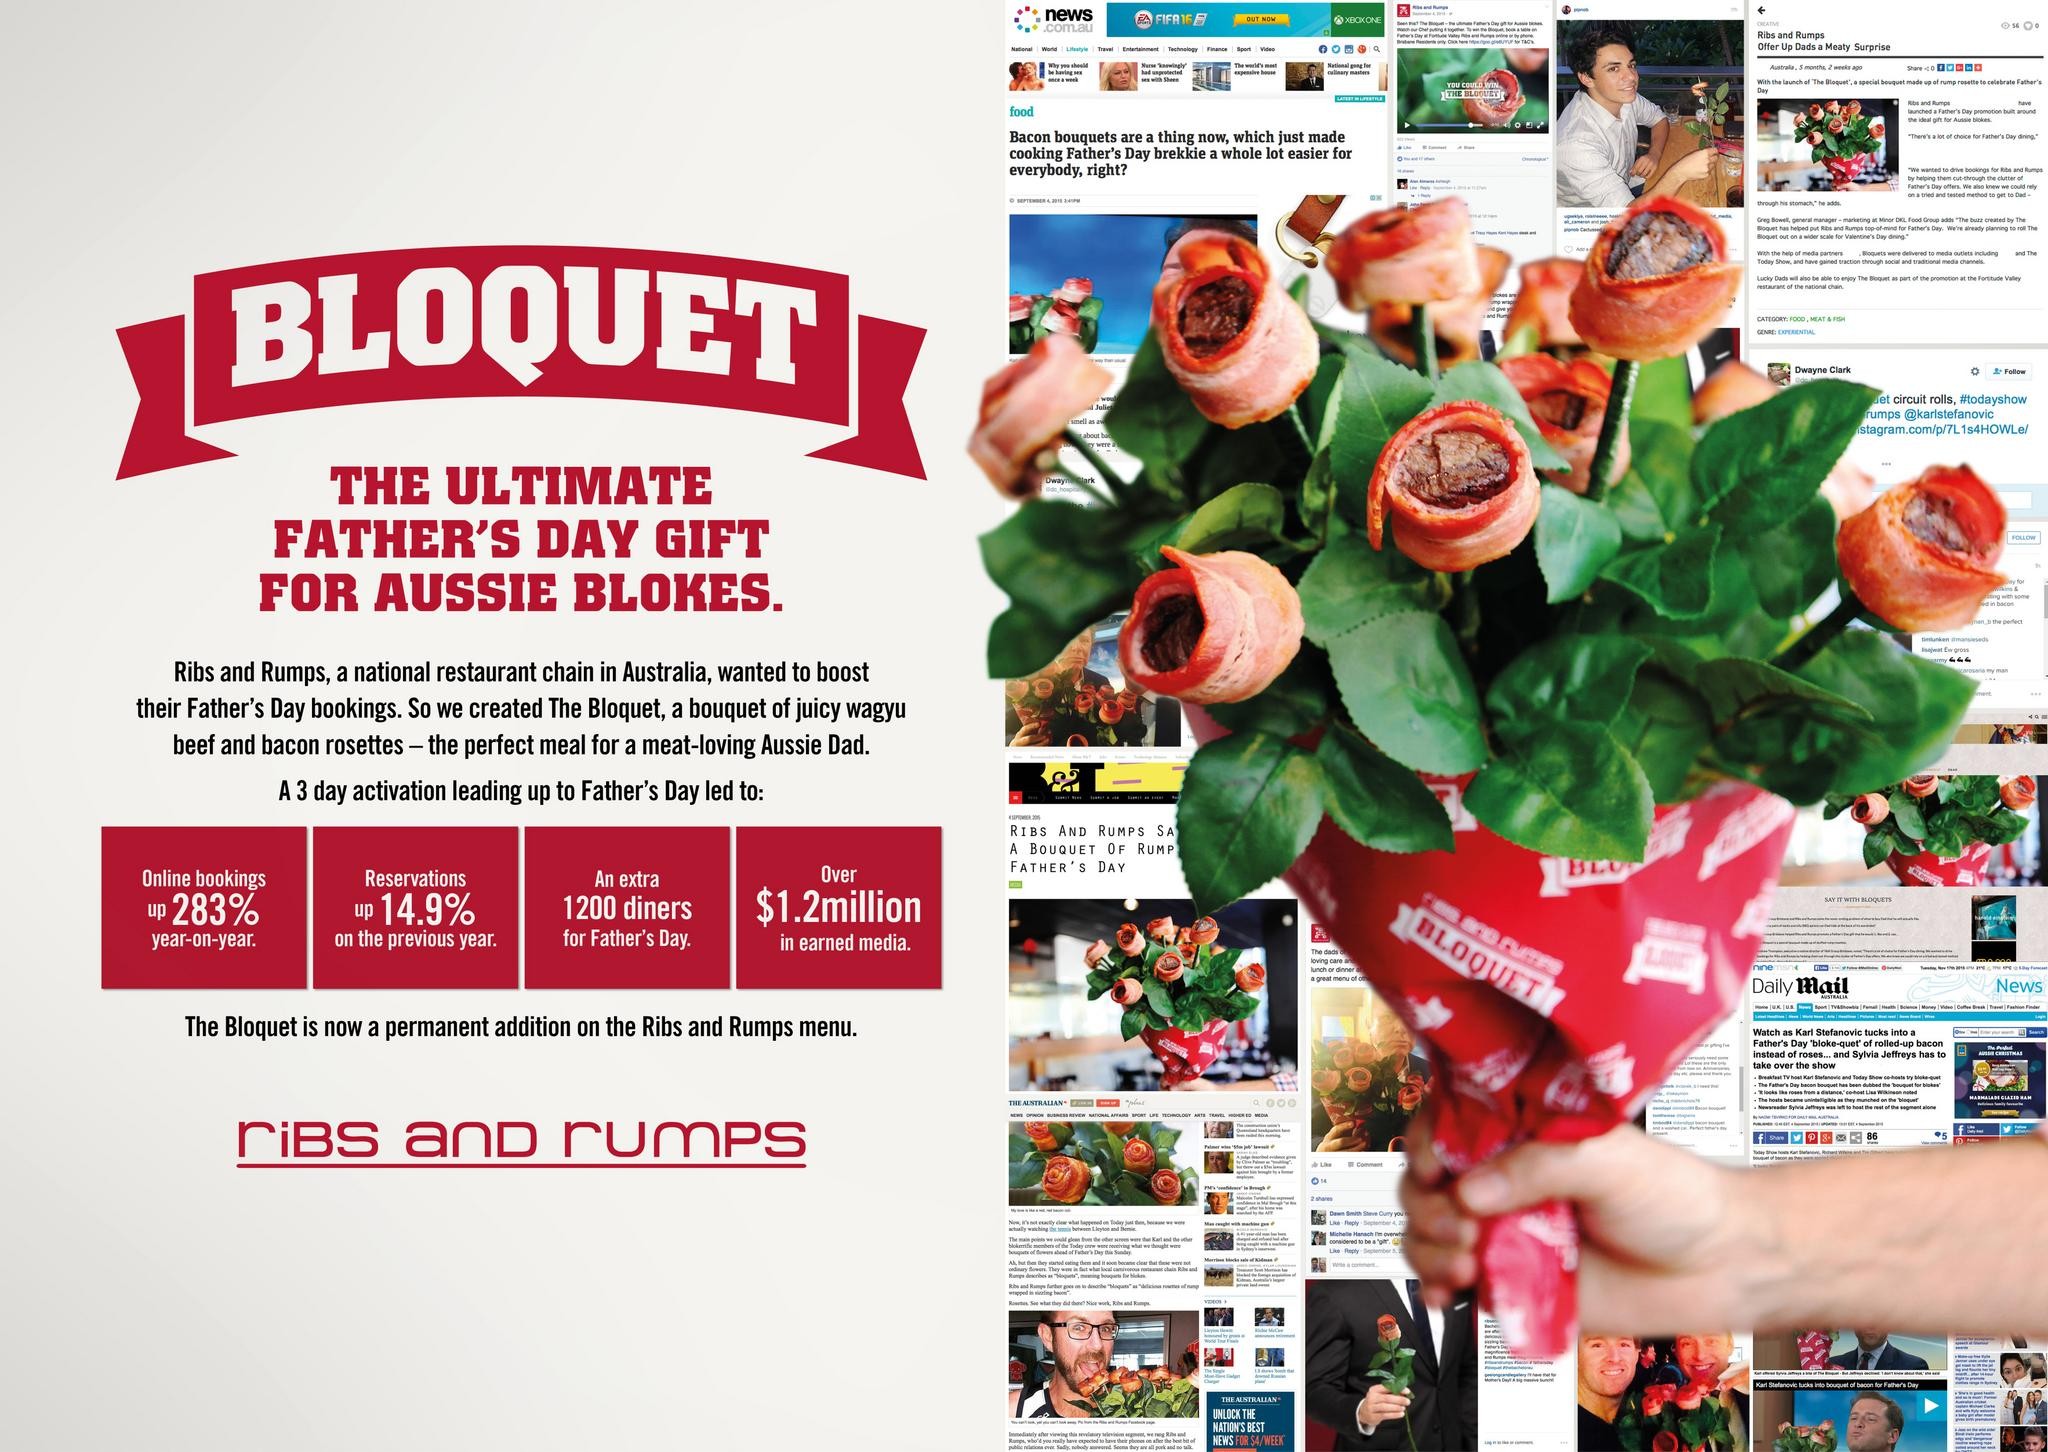 The Bloquet